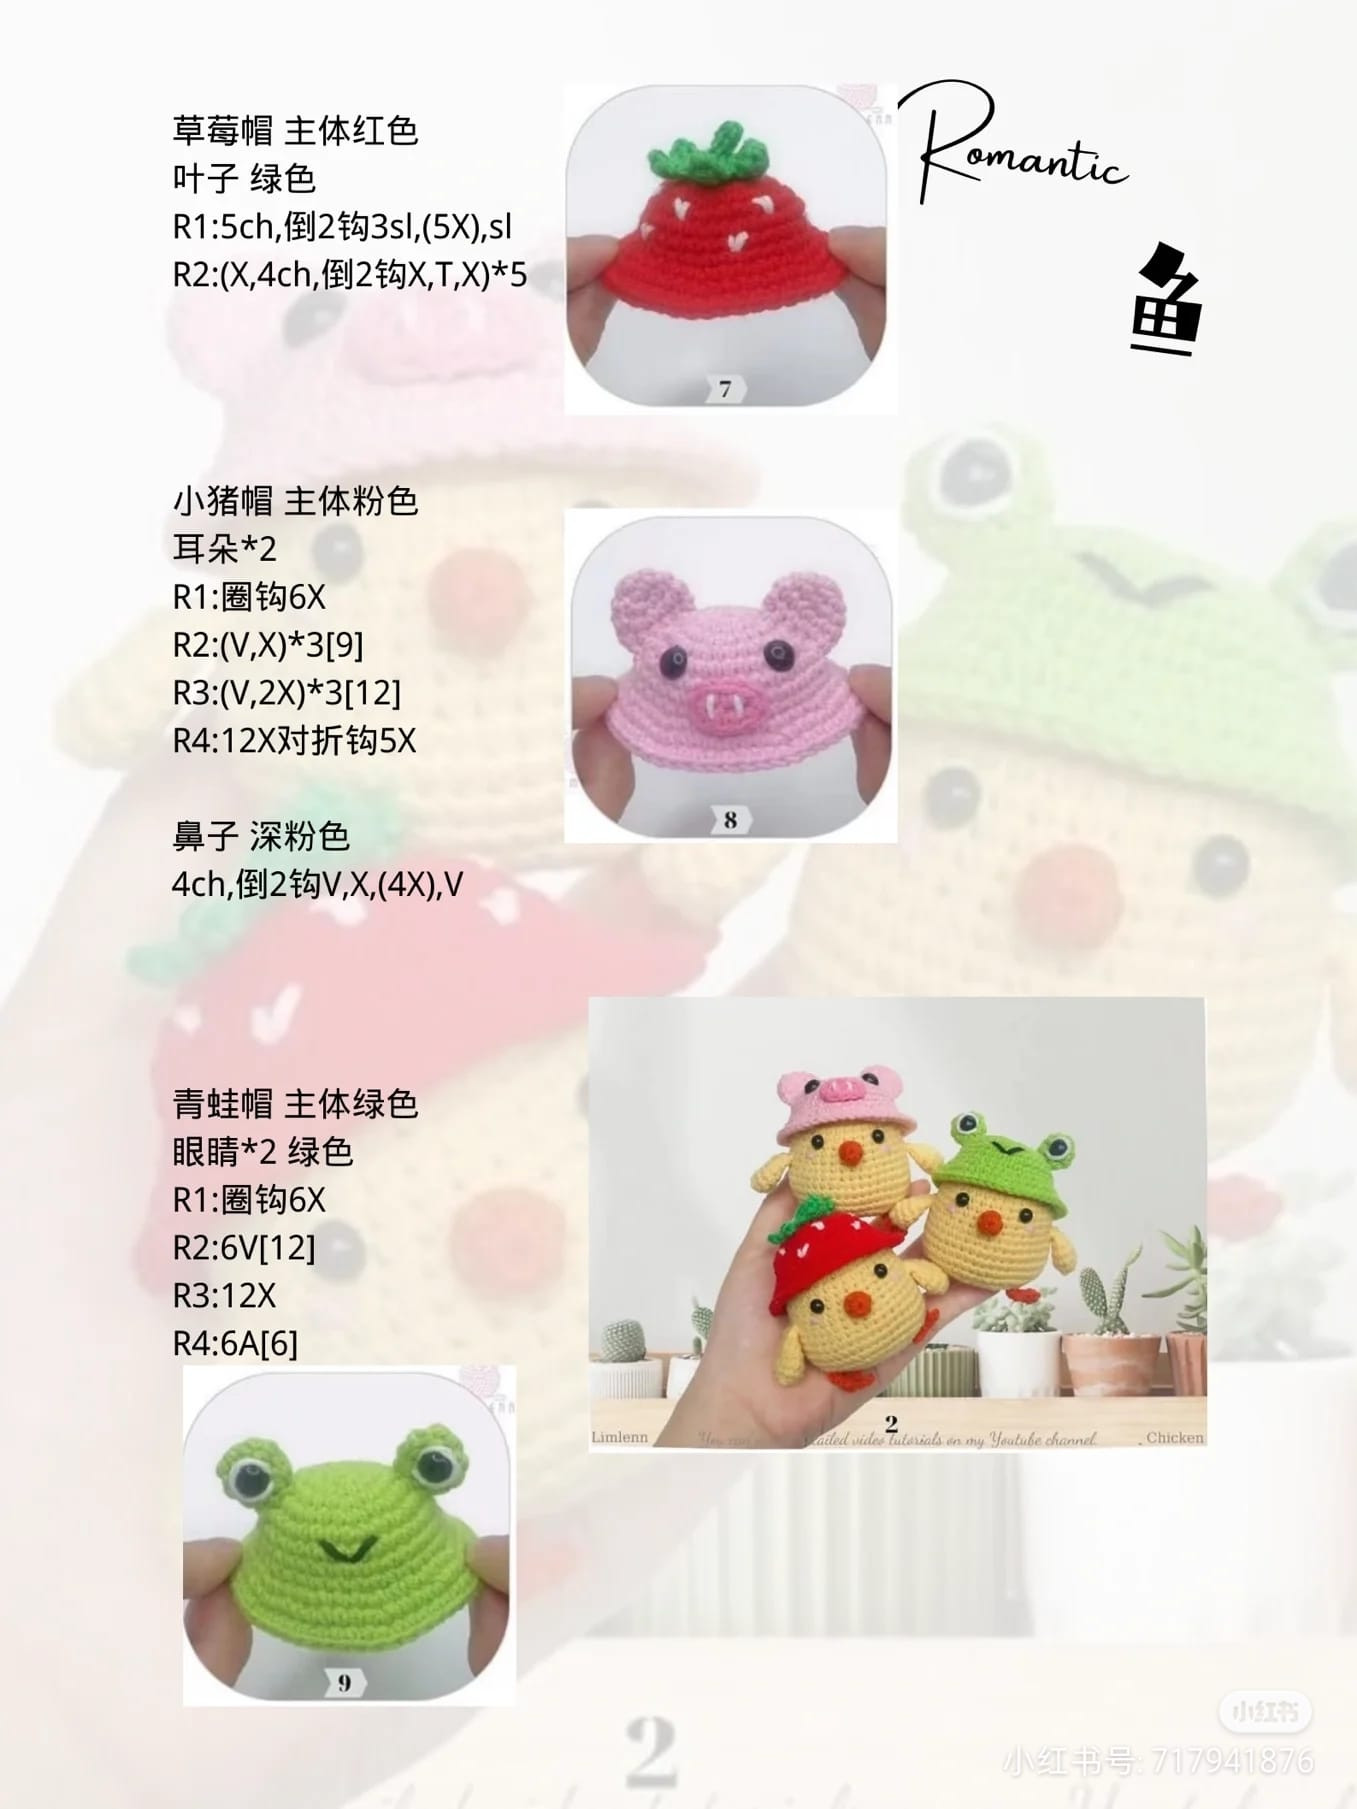 Crochet pattern of chicks wearing strawberry hats, pig hats, frog hats